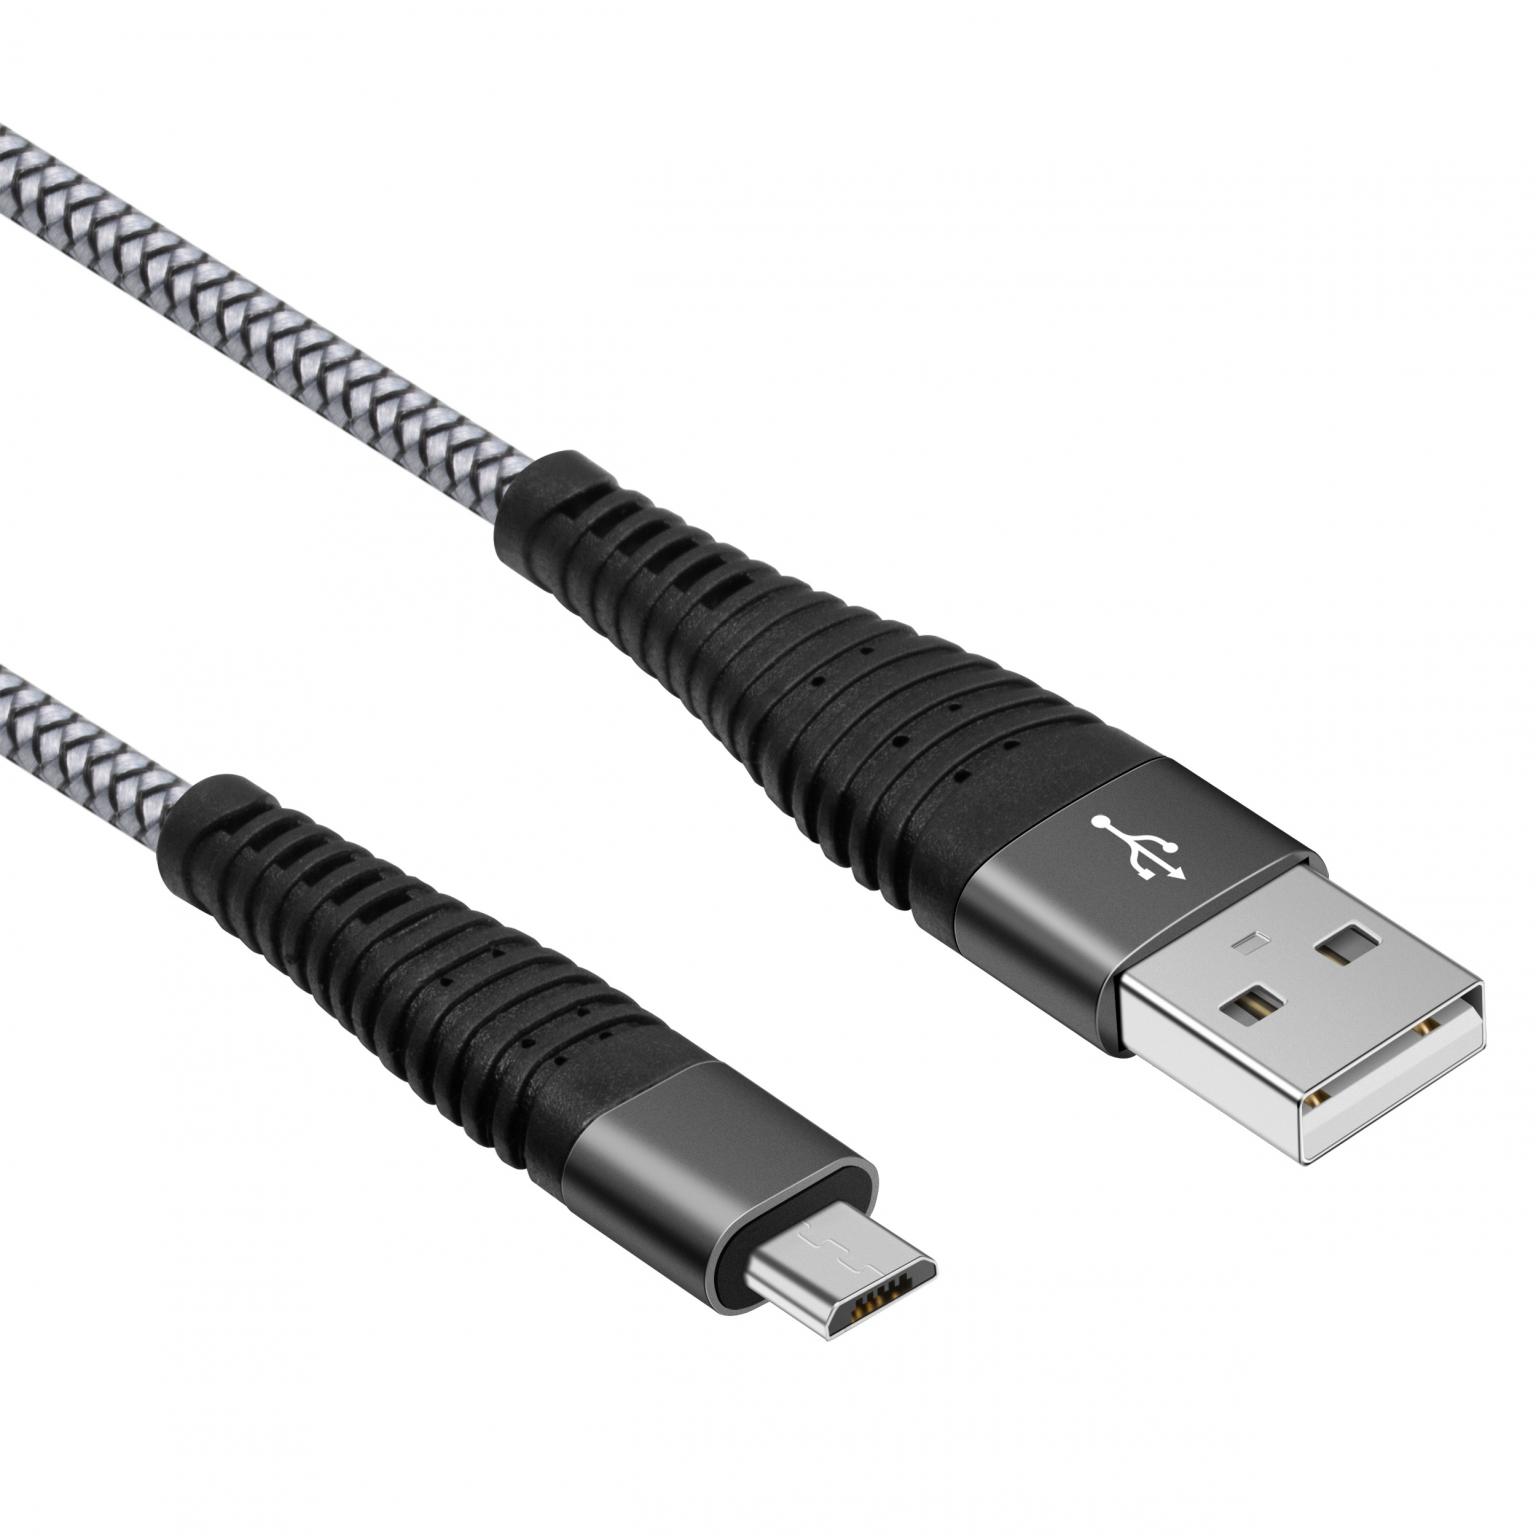 USB Micro B datakabel - 0.5 meter - Zilver - Allteq